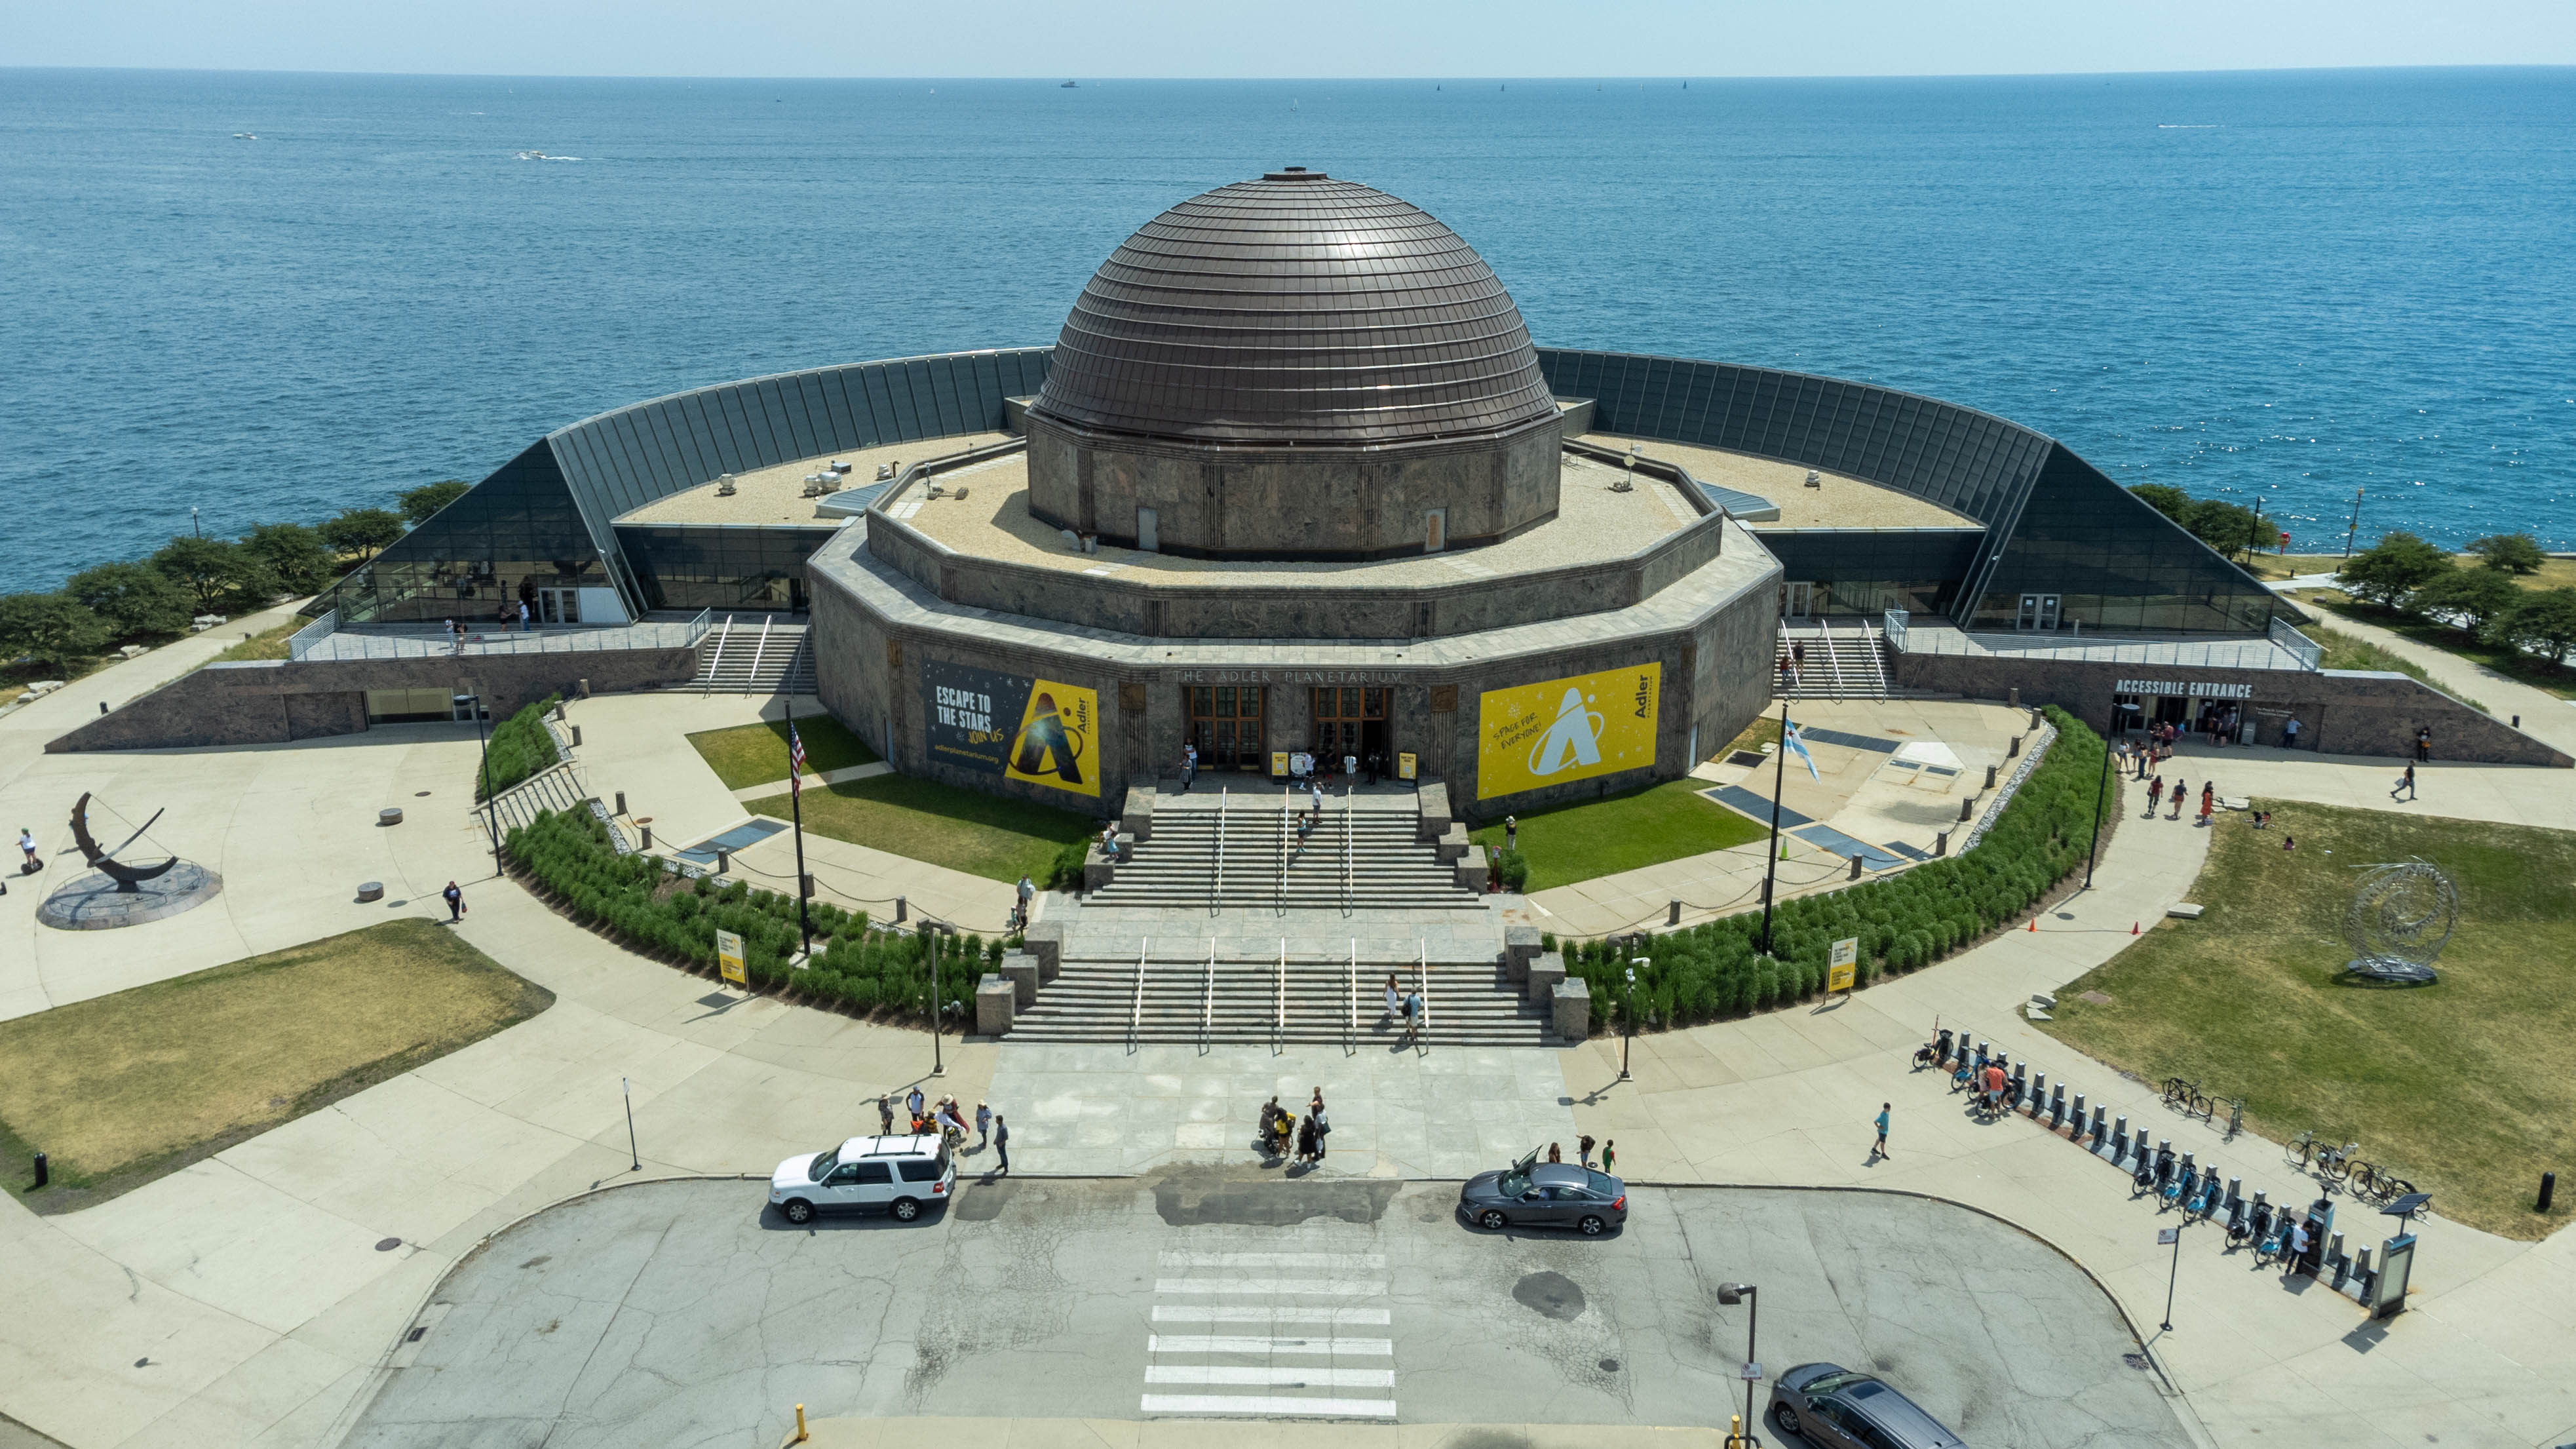 The Adler Planetarium from the 12th Street Beach, Chicago